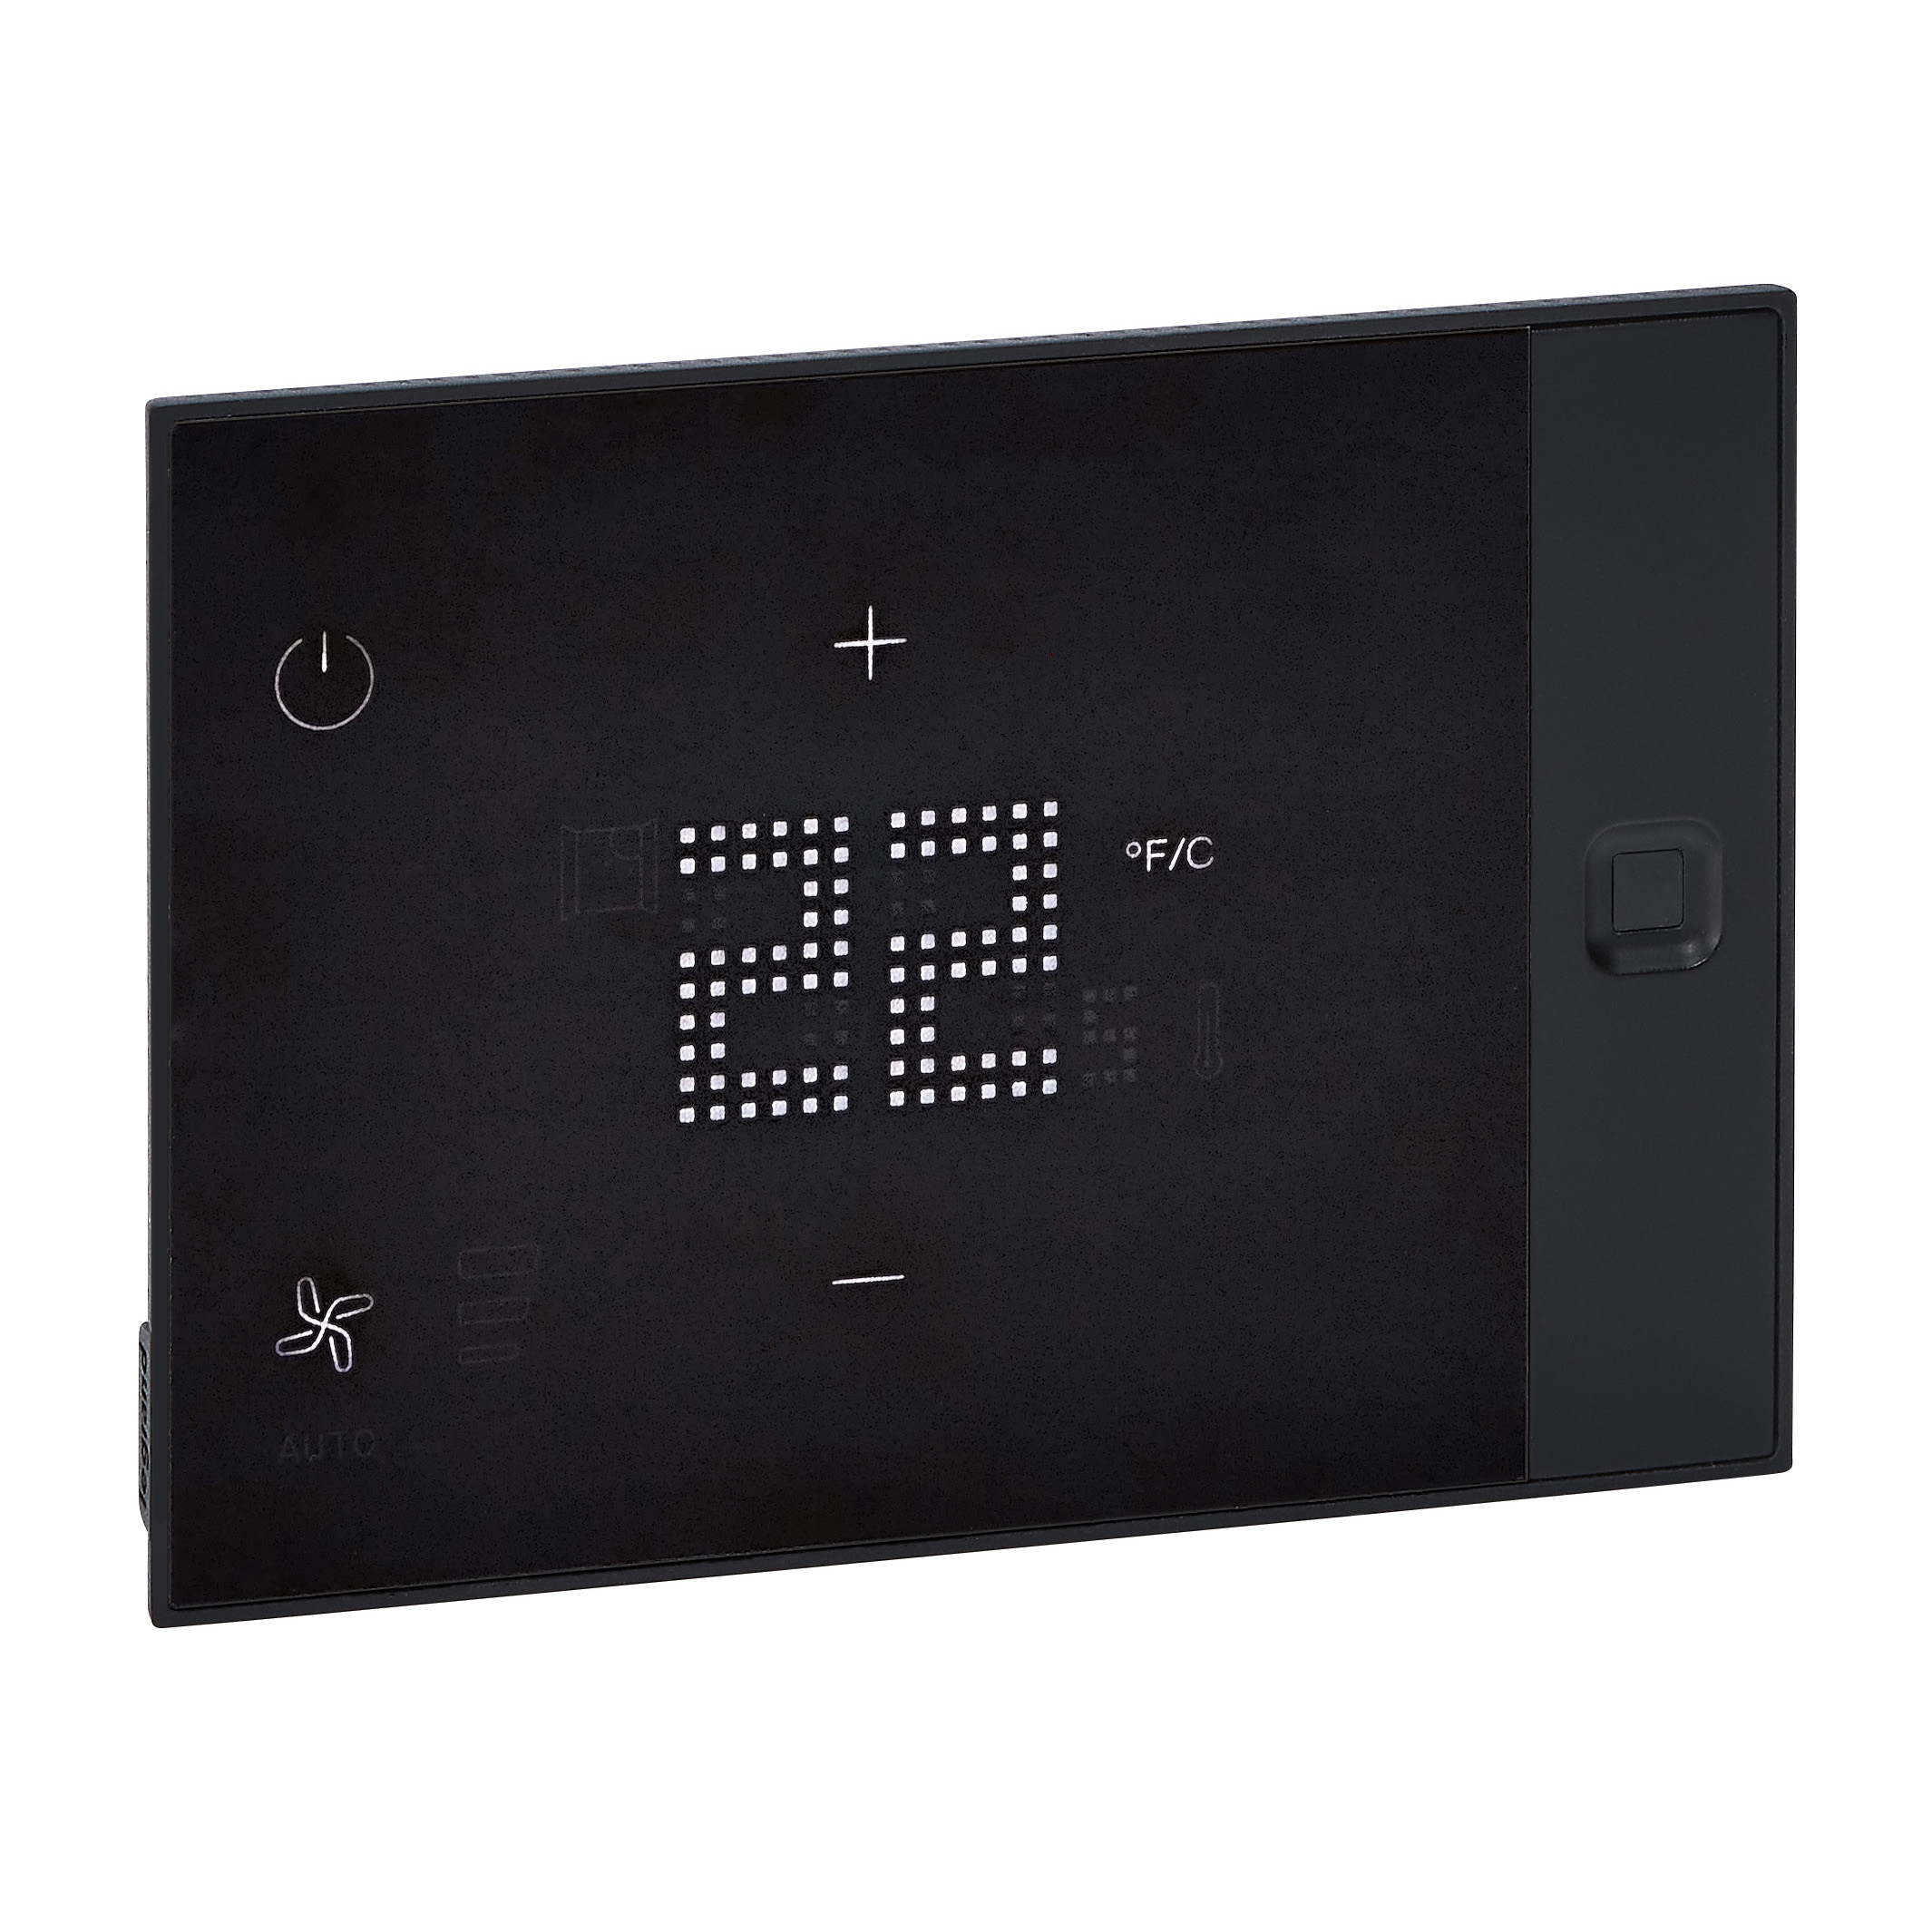 UXone flush mounting Hotel Thermostat 230V in black color, 048900, 3414972021173